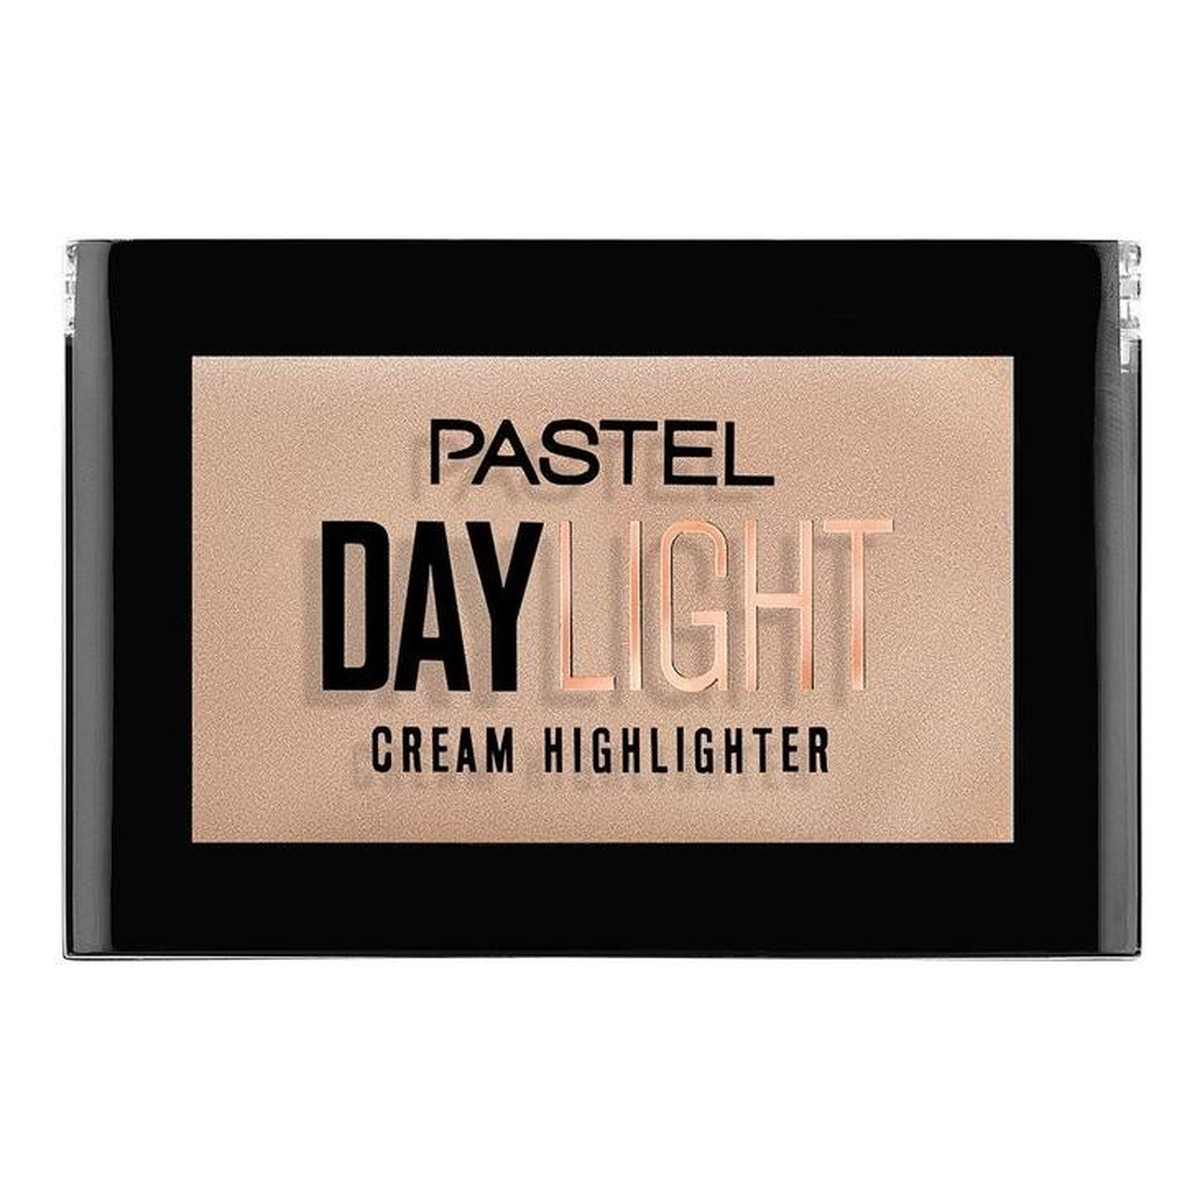 Pastel Daylight Cream Highlighter Rozświetlacz kremowy 3g